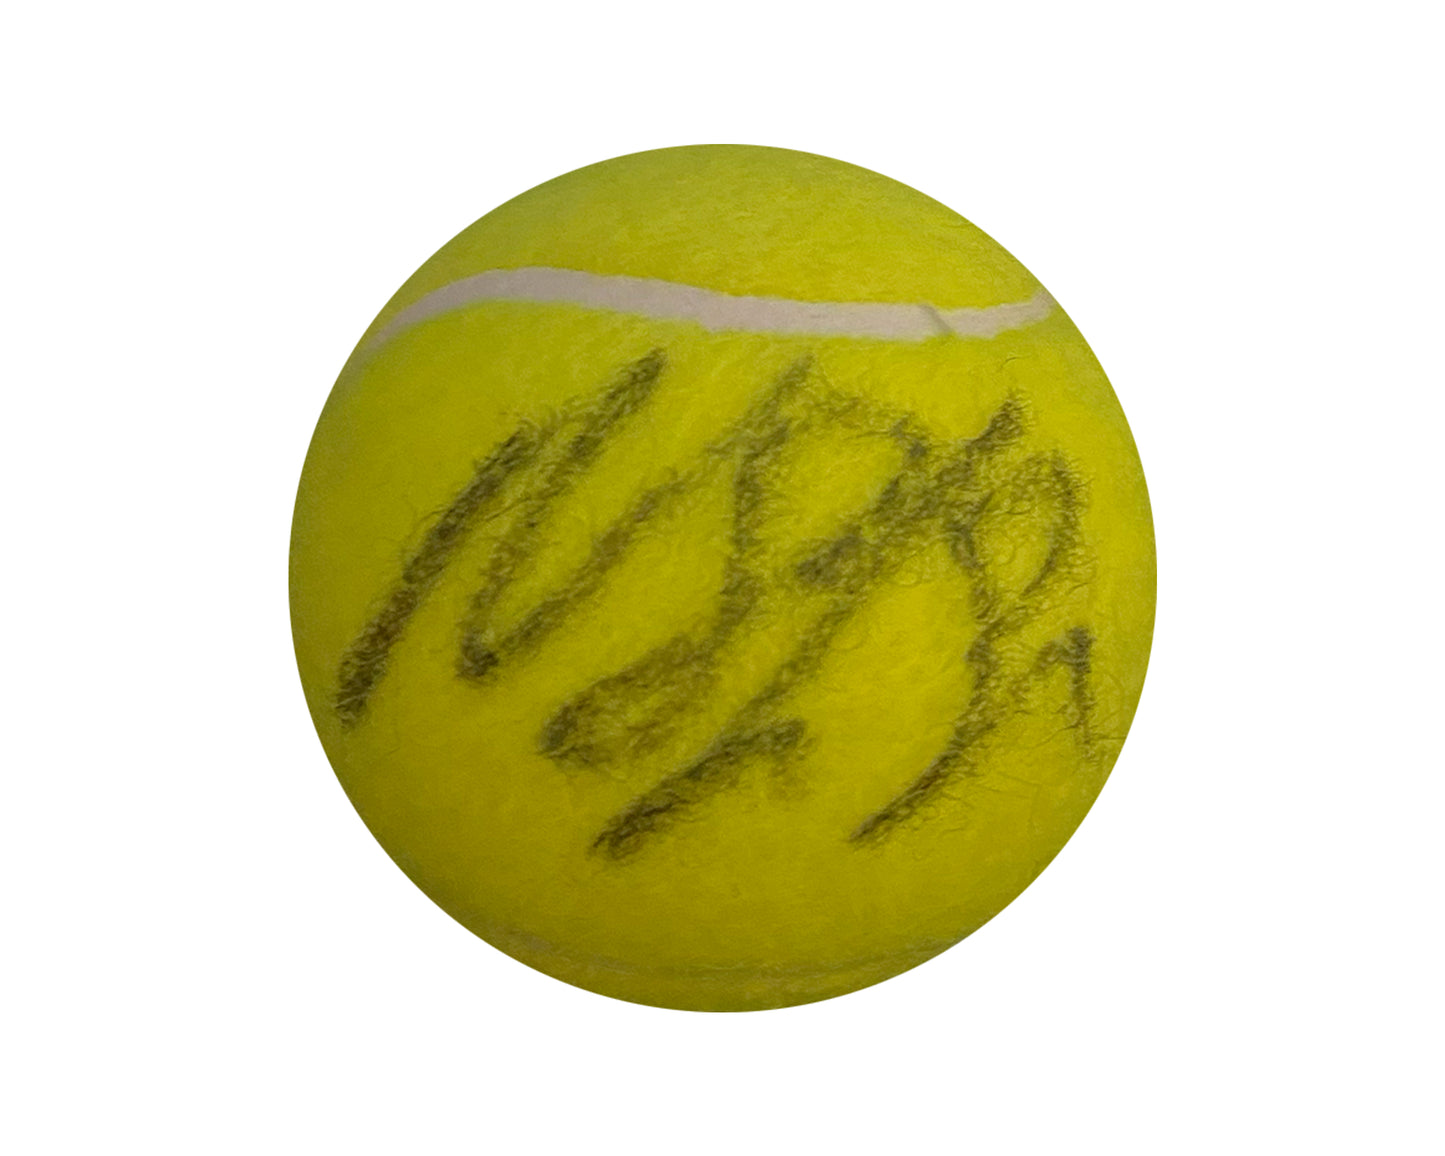 Neal Skupski Autographed Tennis Ball